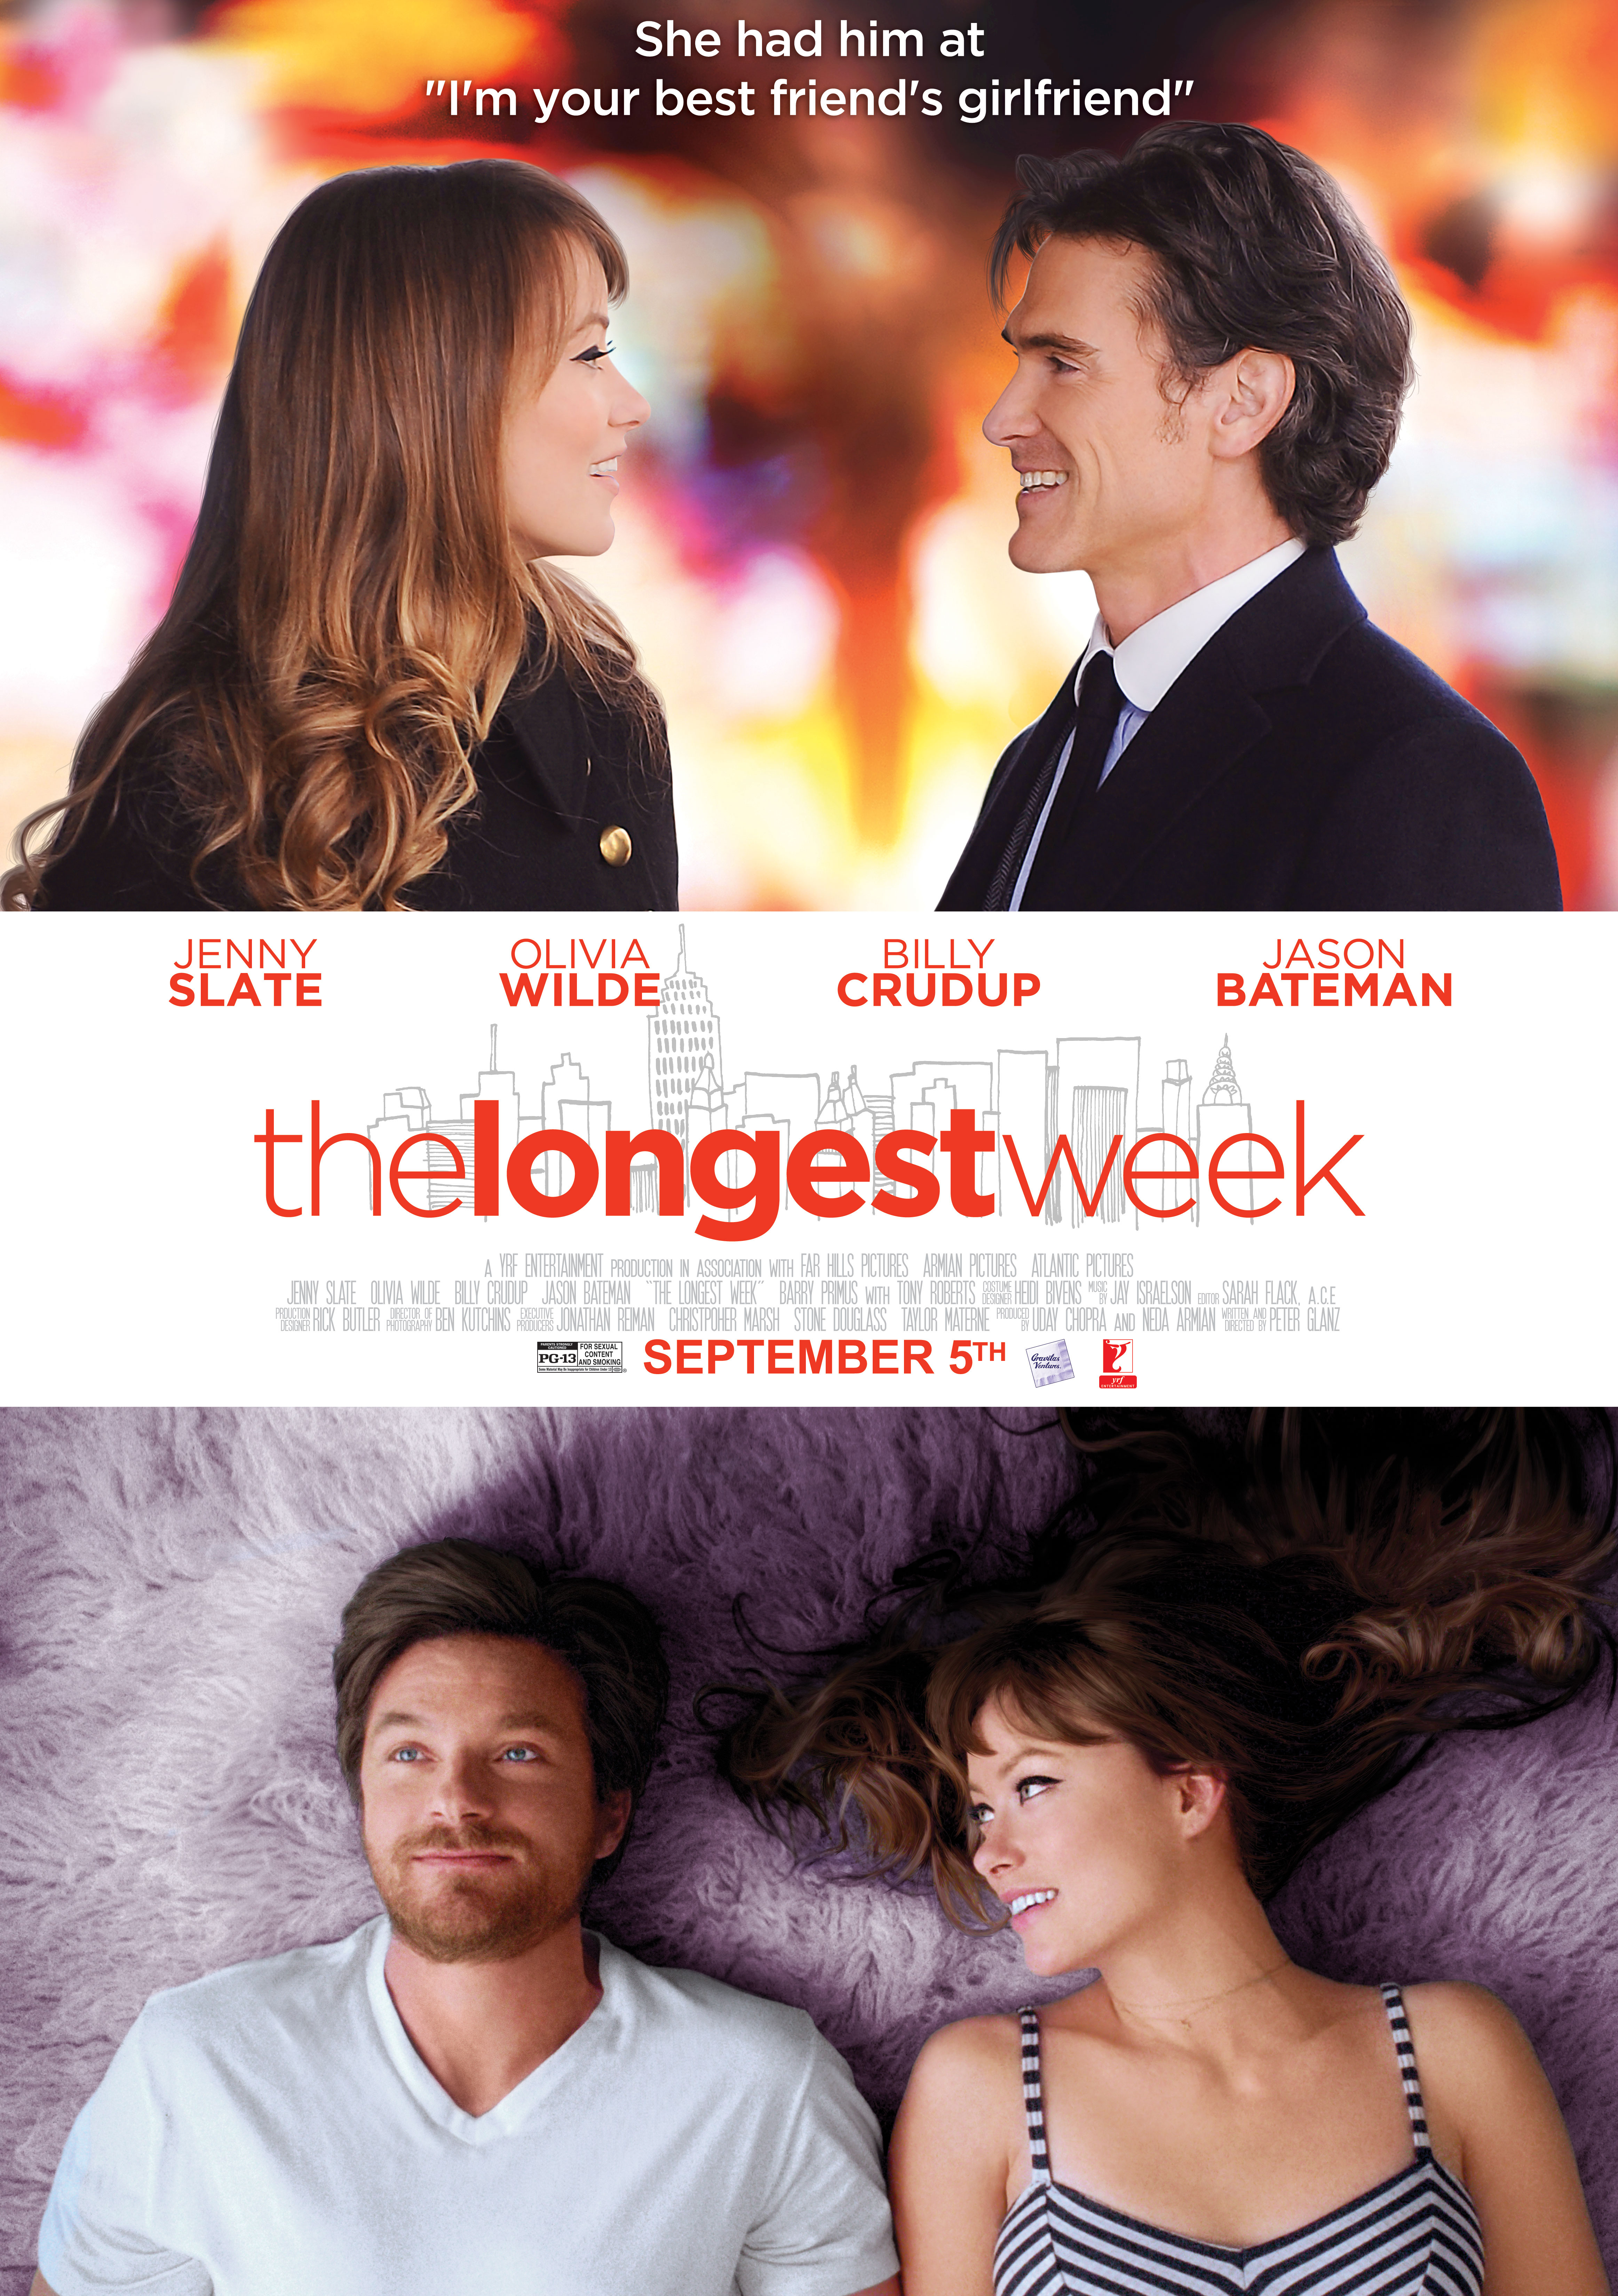 Jason Bateman, Billy Crudup and Olivia Wilde in The Longest Week (2014)